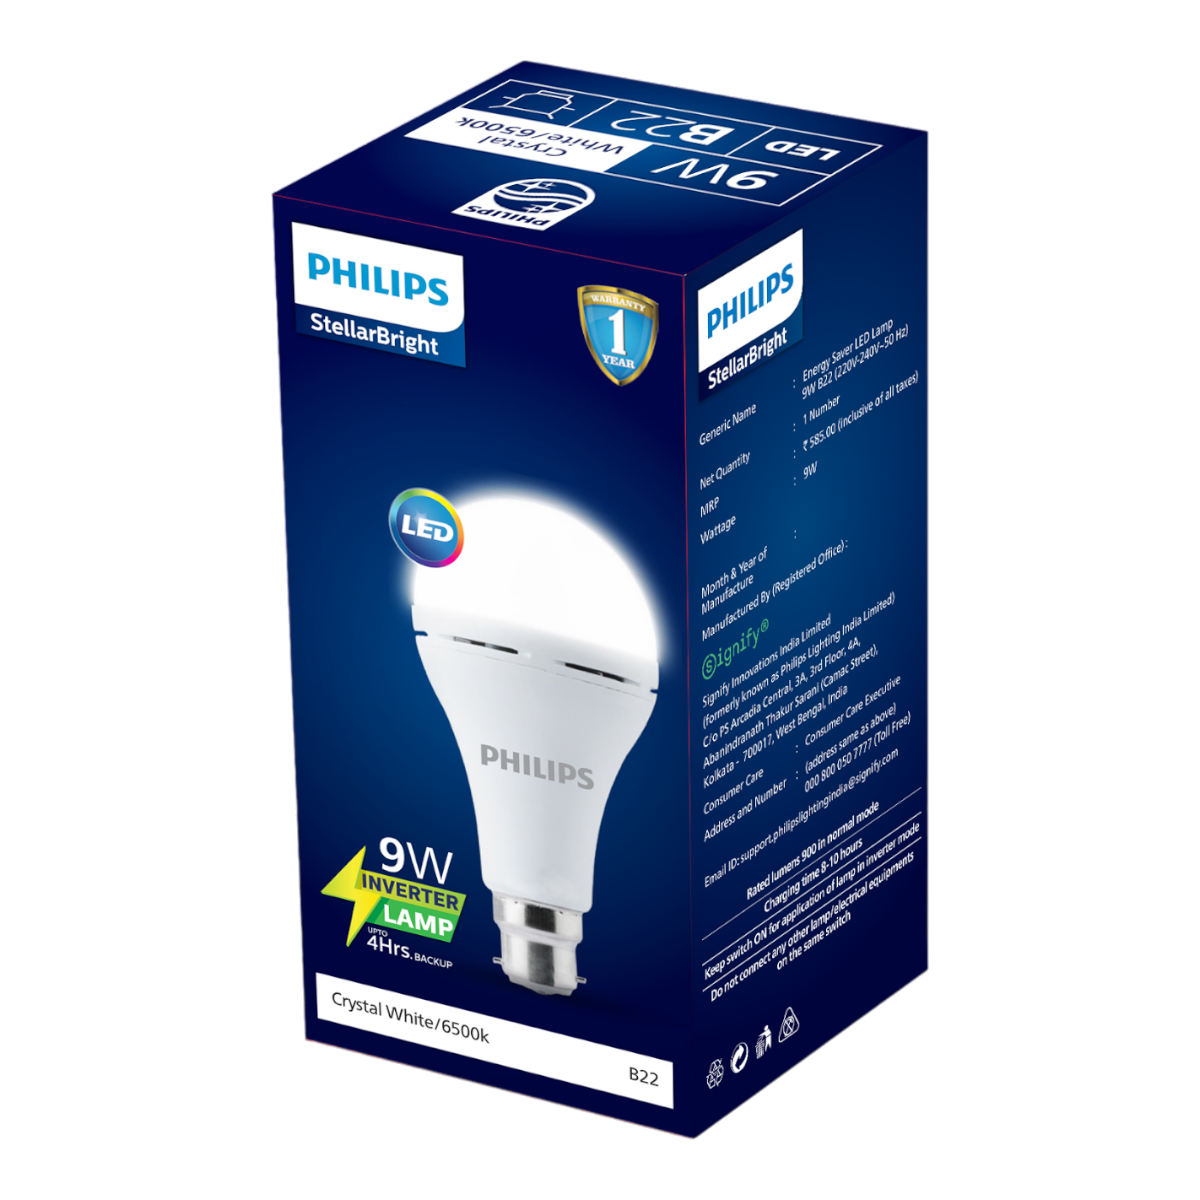 Philips Stellar Bright Emergency Inverter LED Bulb